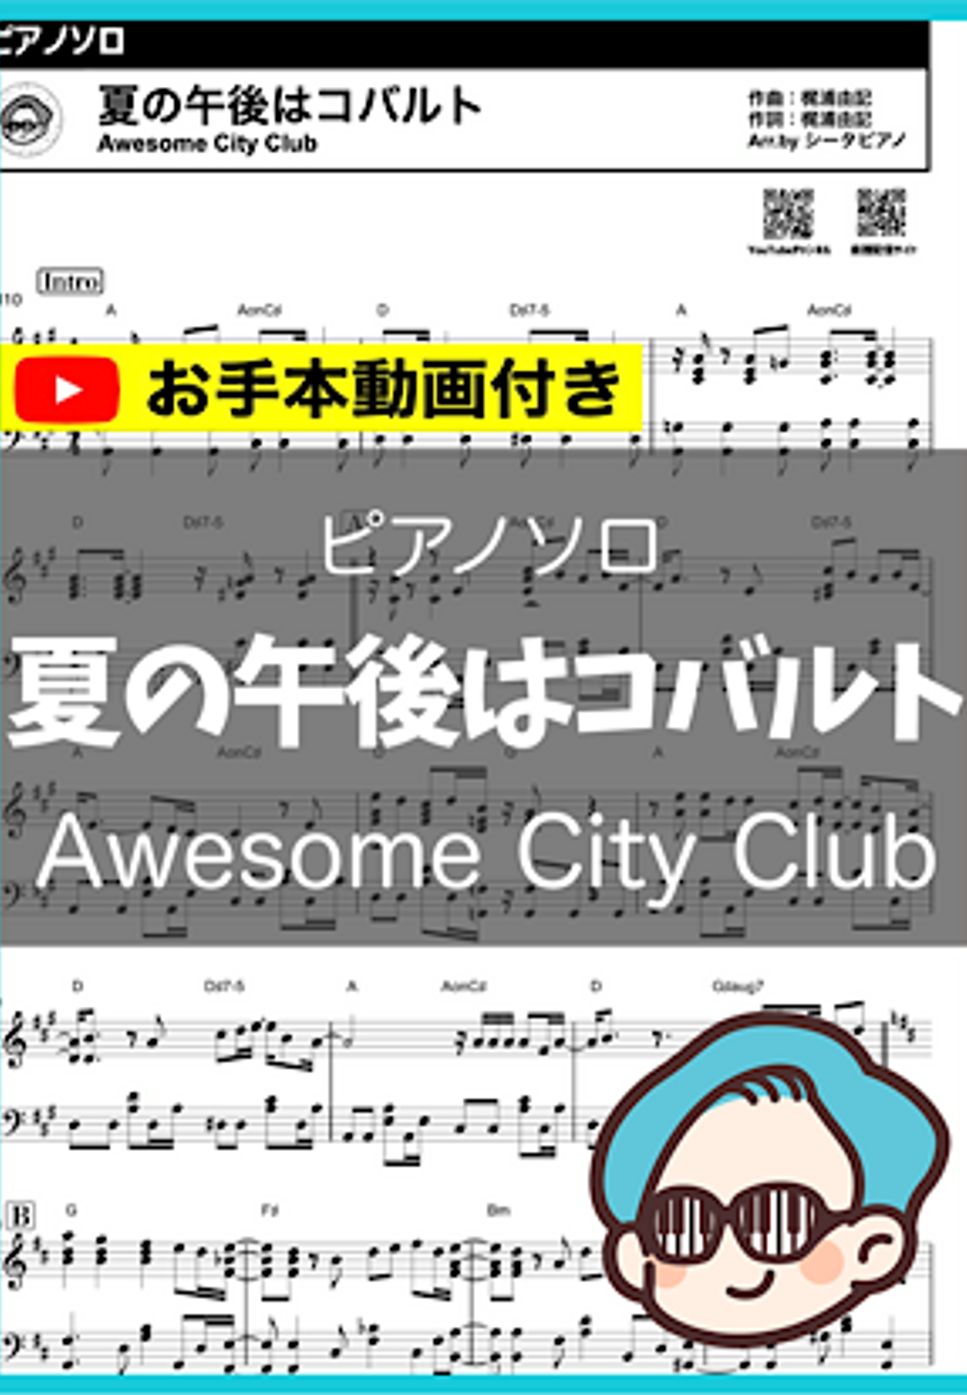 Awesome City Club - 夏の午後はコバルト by シータピアノ